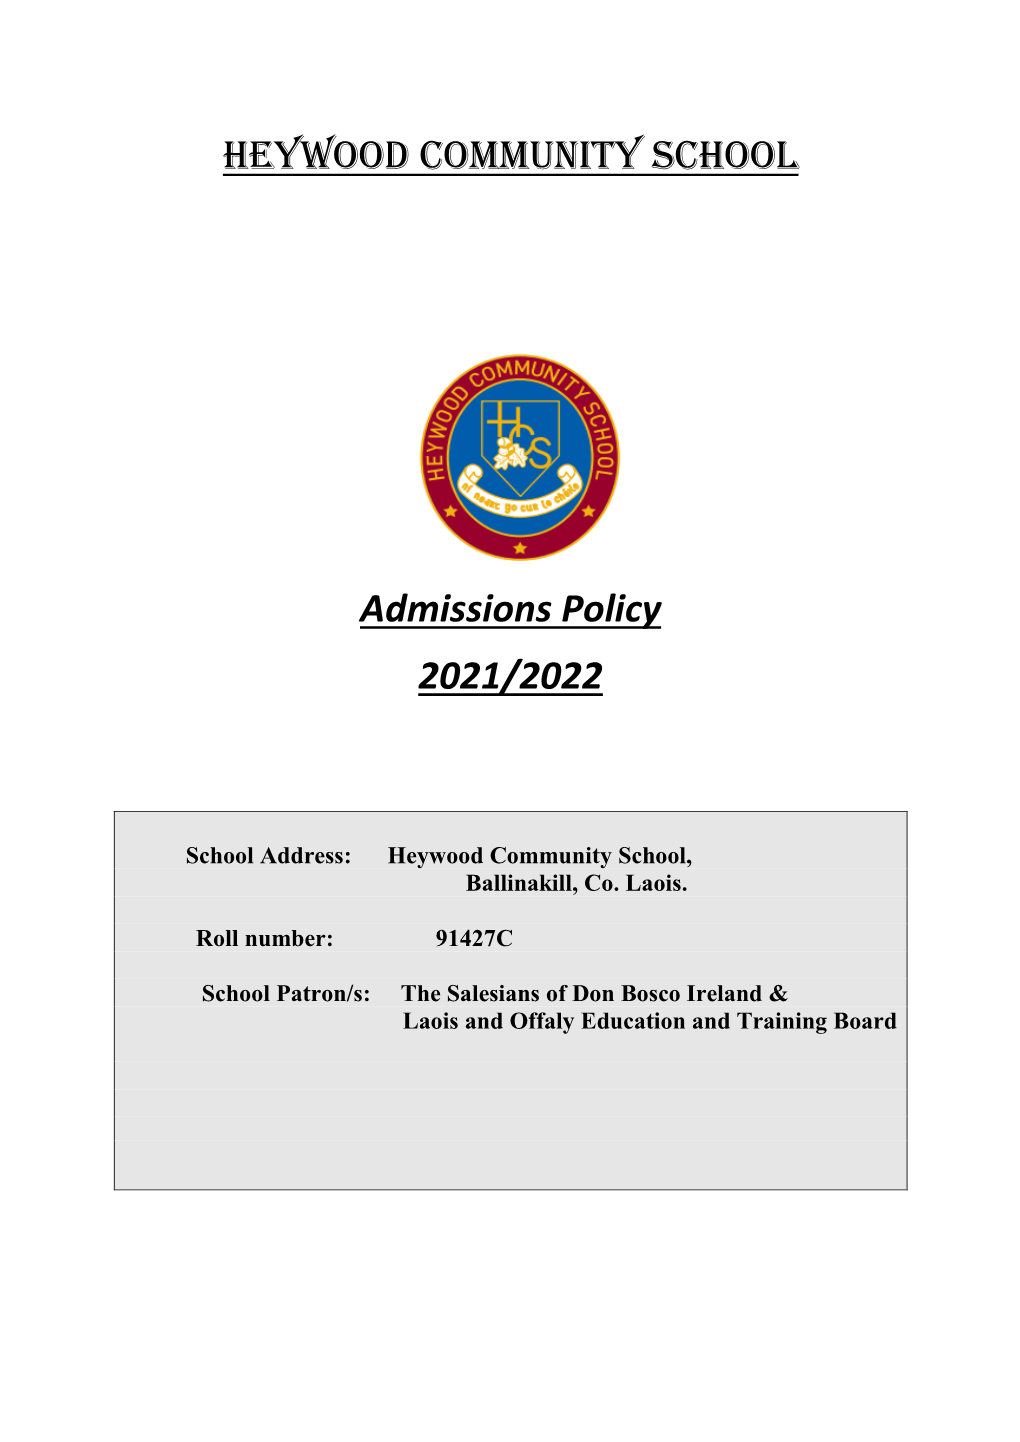 Heywood Community School Admissions Policy 2021/2022